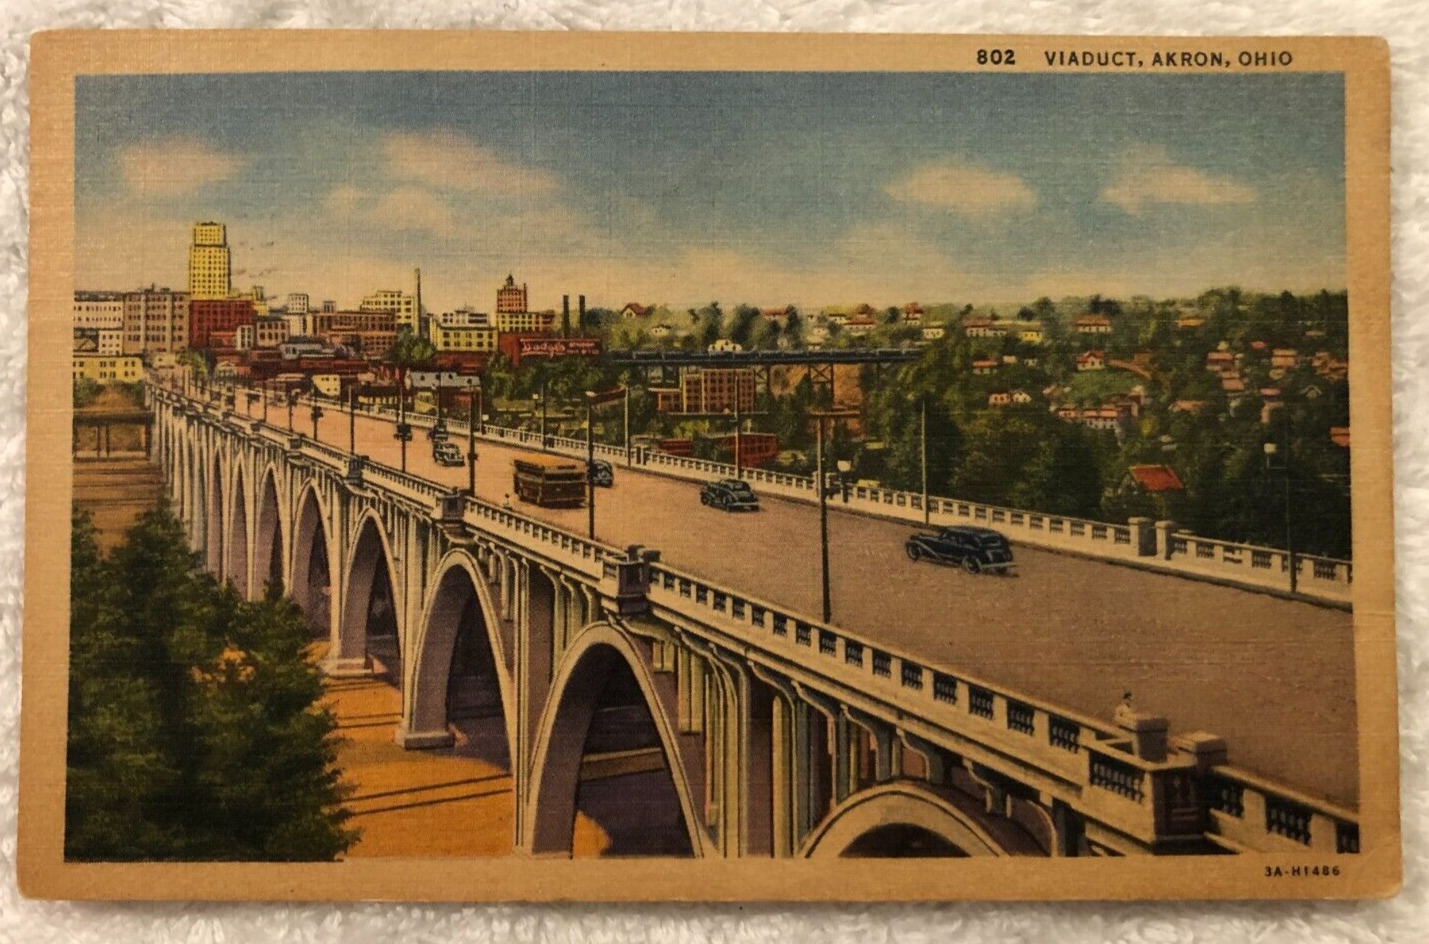 Post Card Viaduct Akron Ohio, posted 1954, Bridge & cars